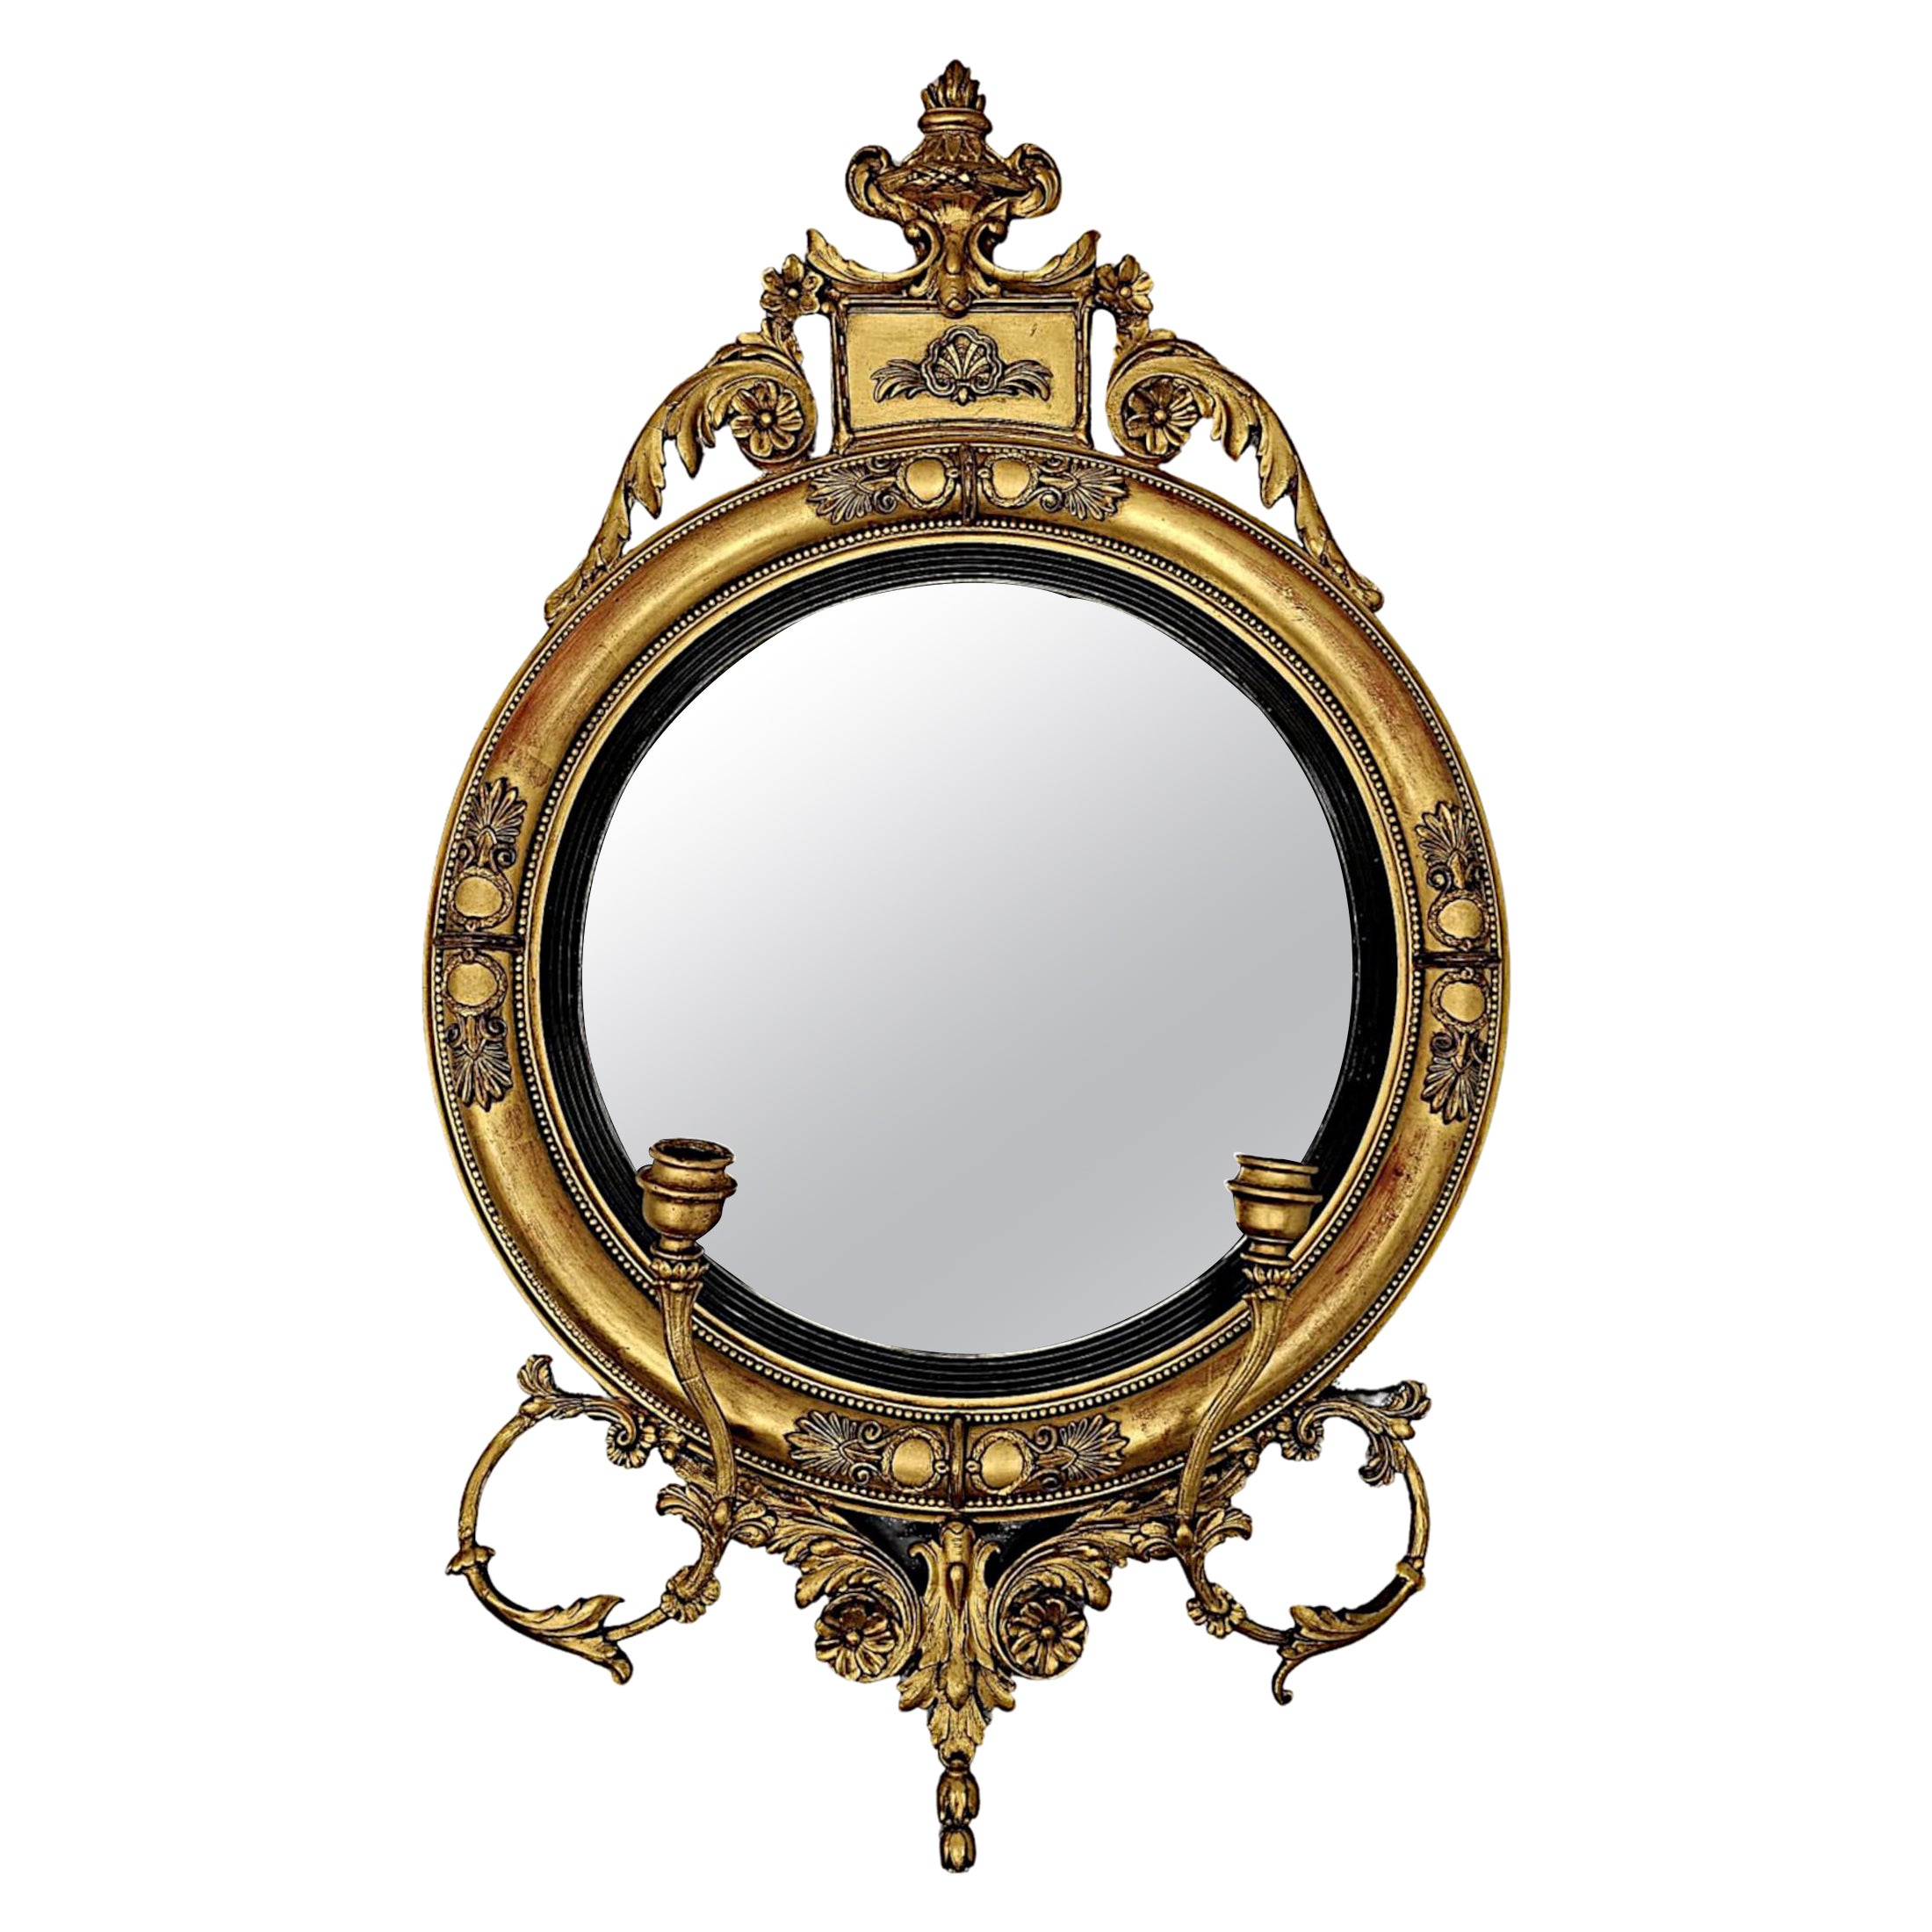  A Very Rare and Fine 19th Century Giltwood Girandole Hall or Pier Mirror For Sale